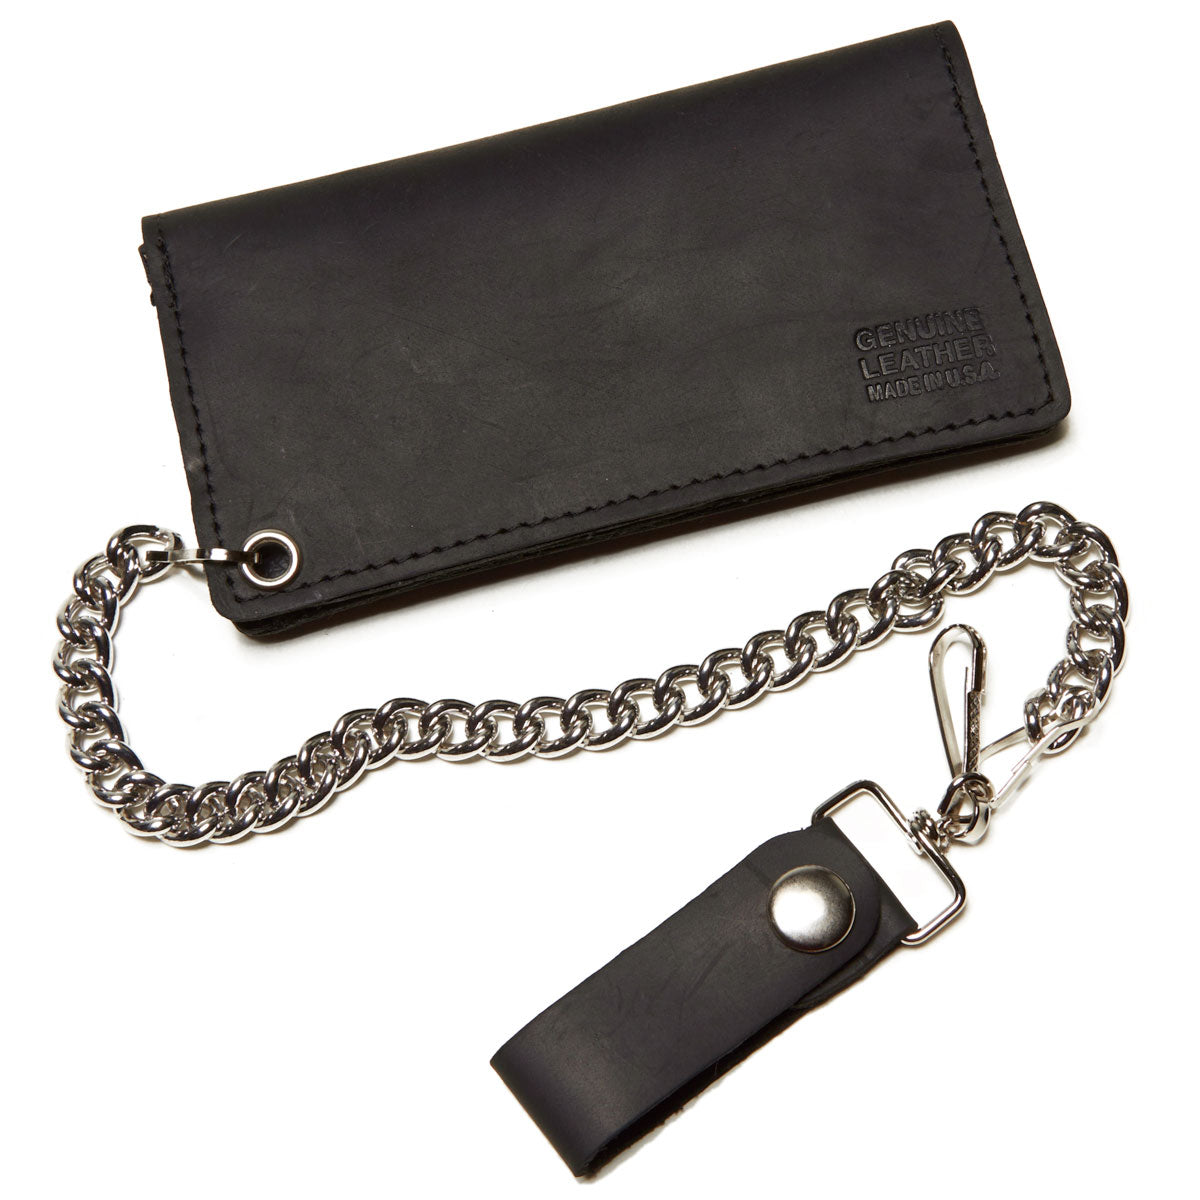 Men's Genuine Leather Chain Wallet